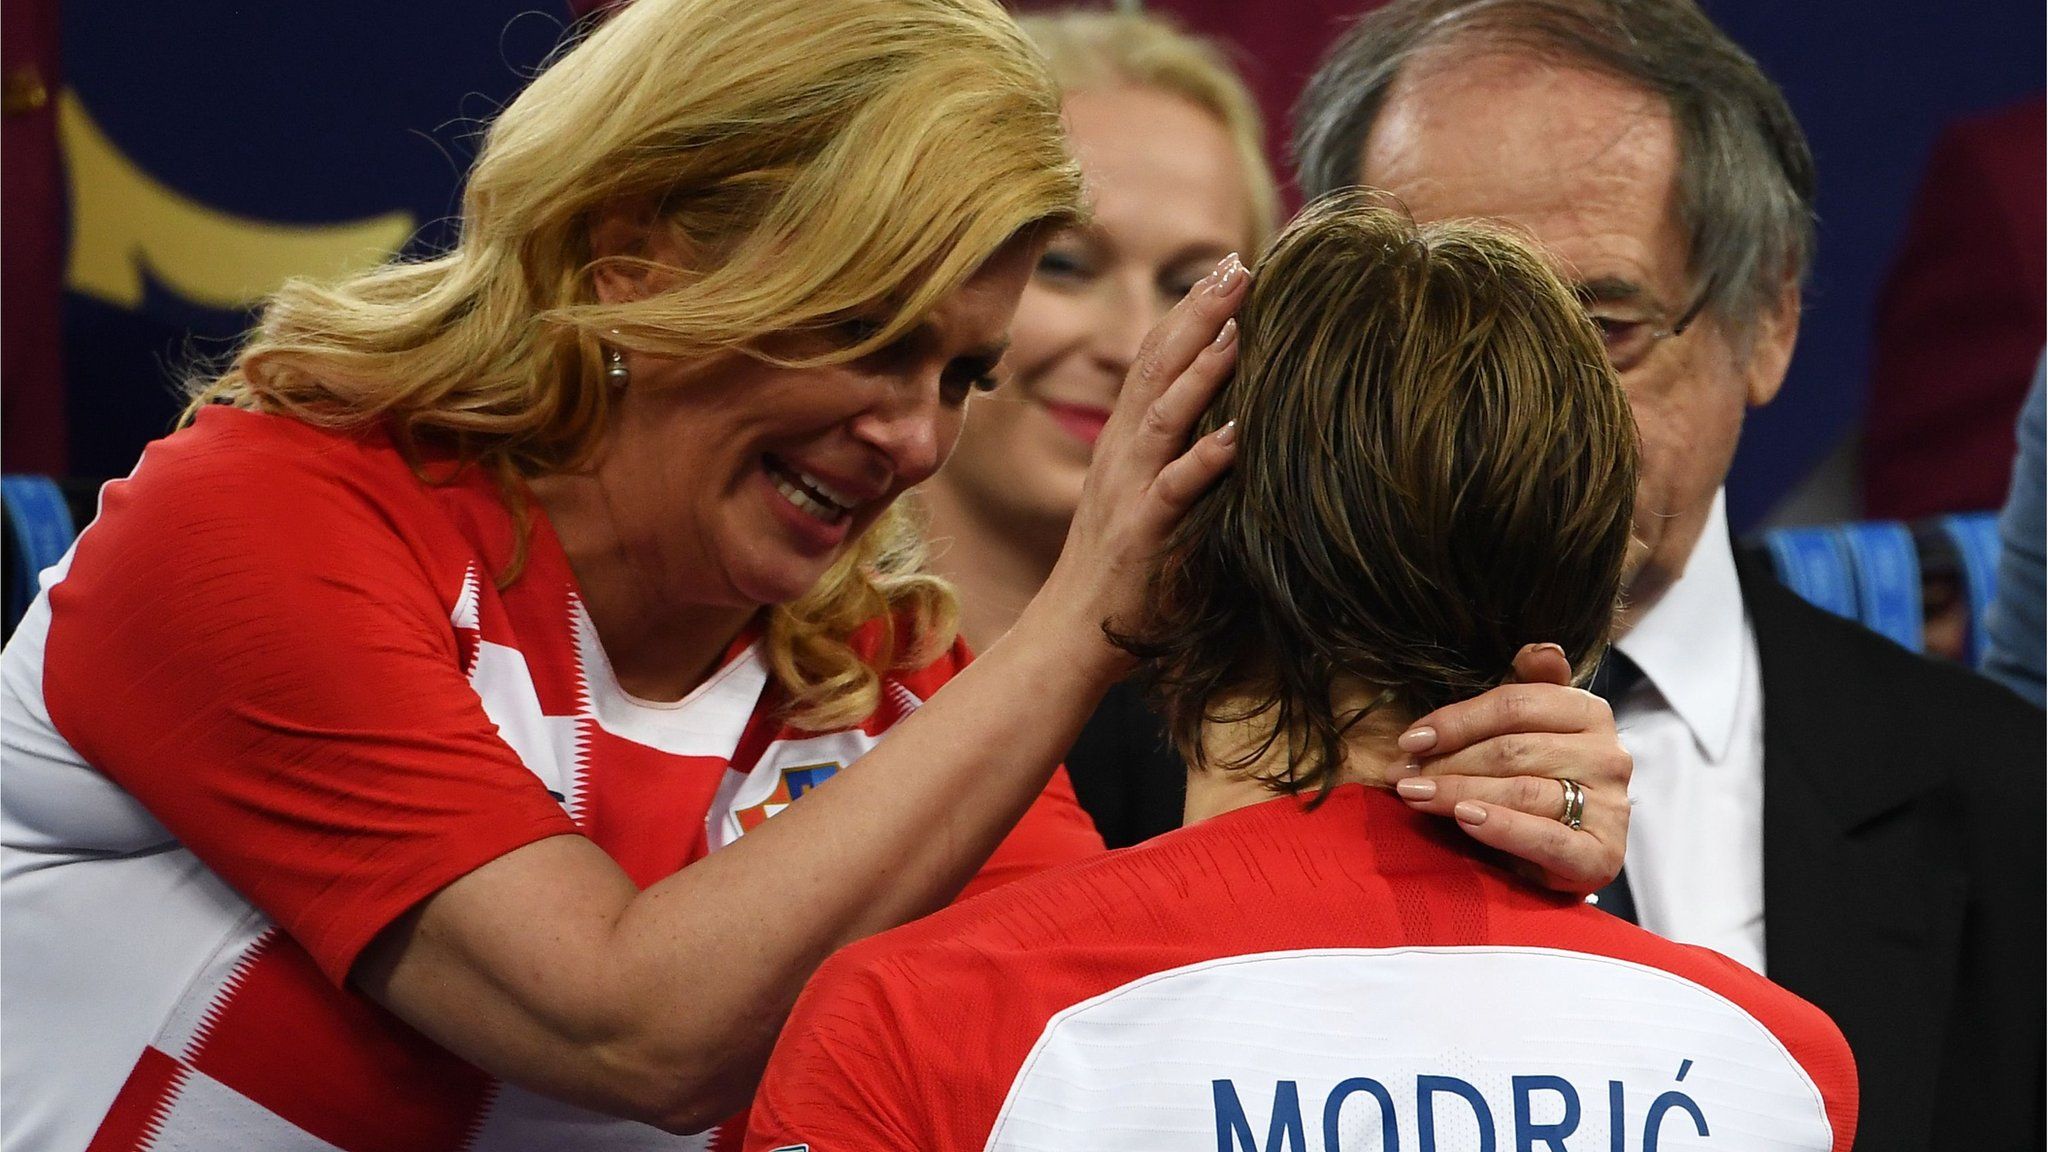 Croatia president Kolinda Grabar-Kitarovic embraces Luka Modric after the World Cup final